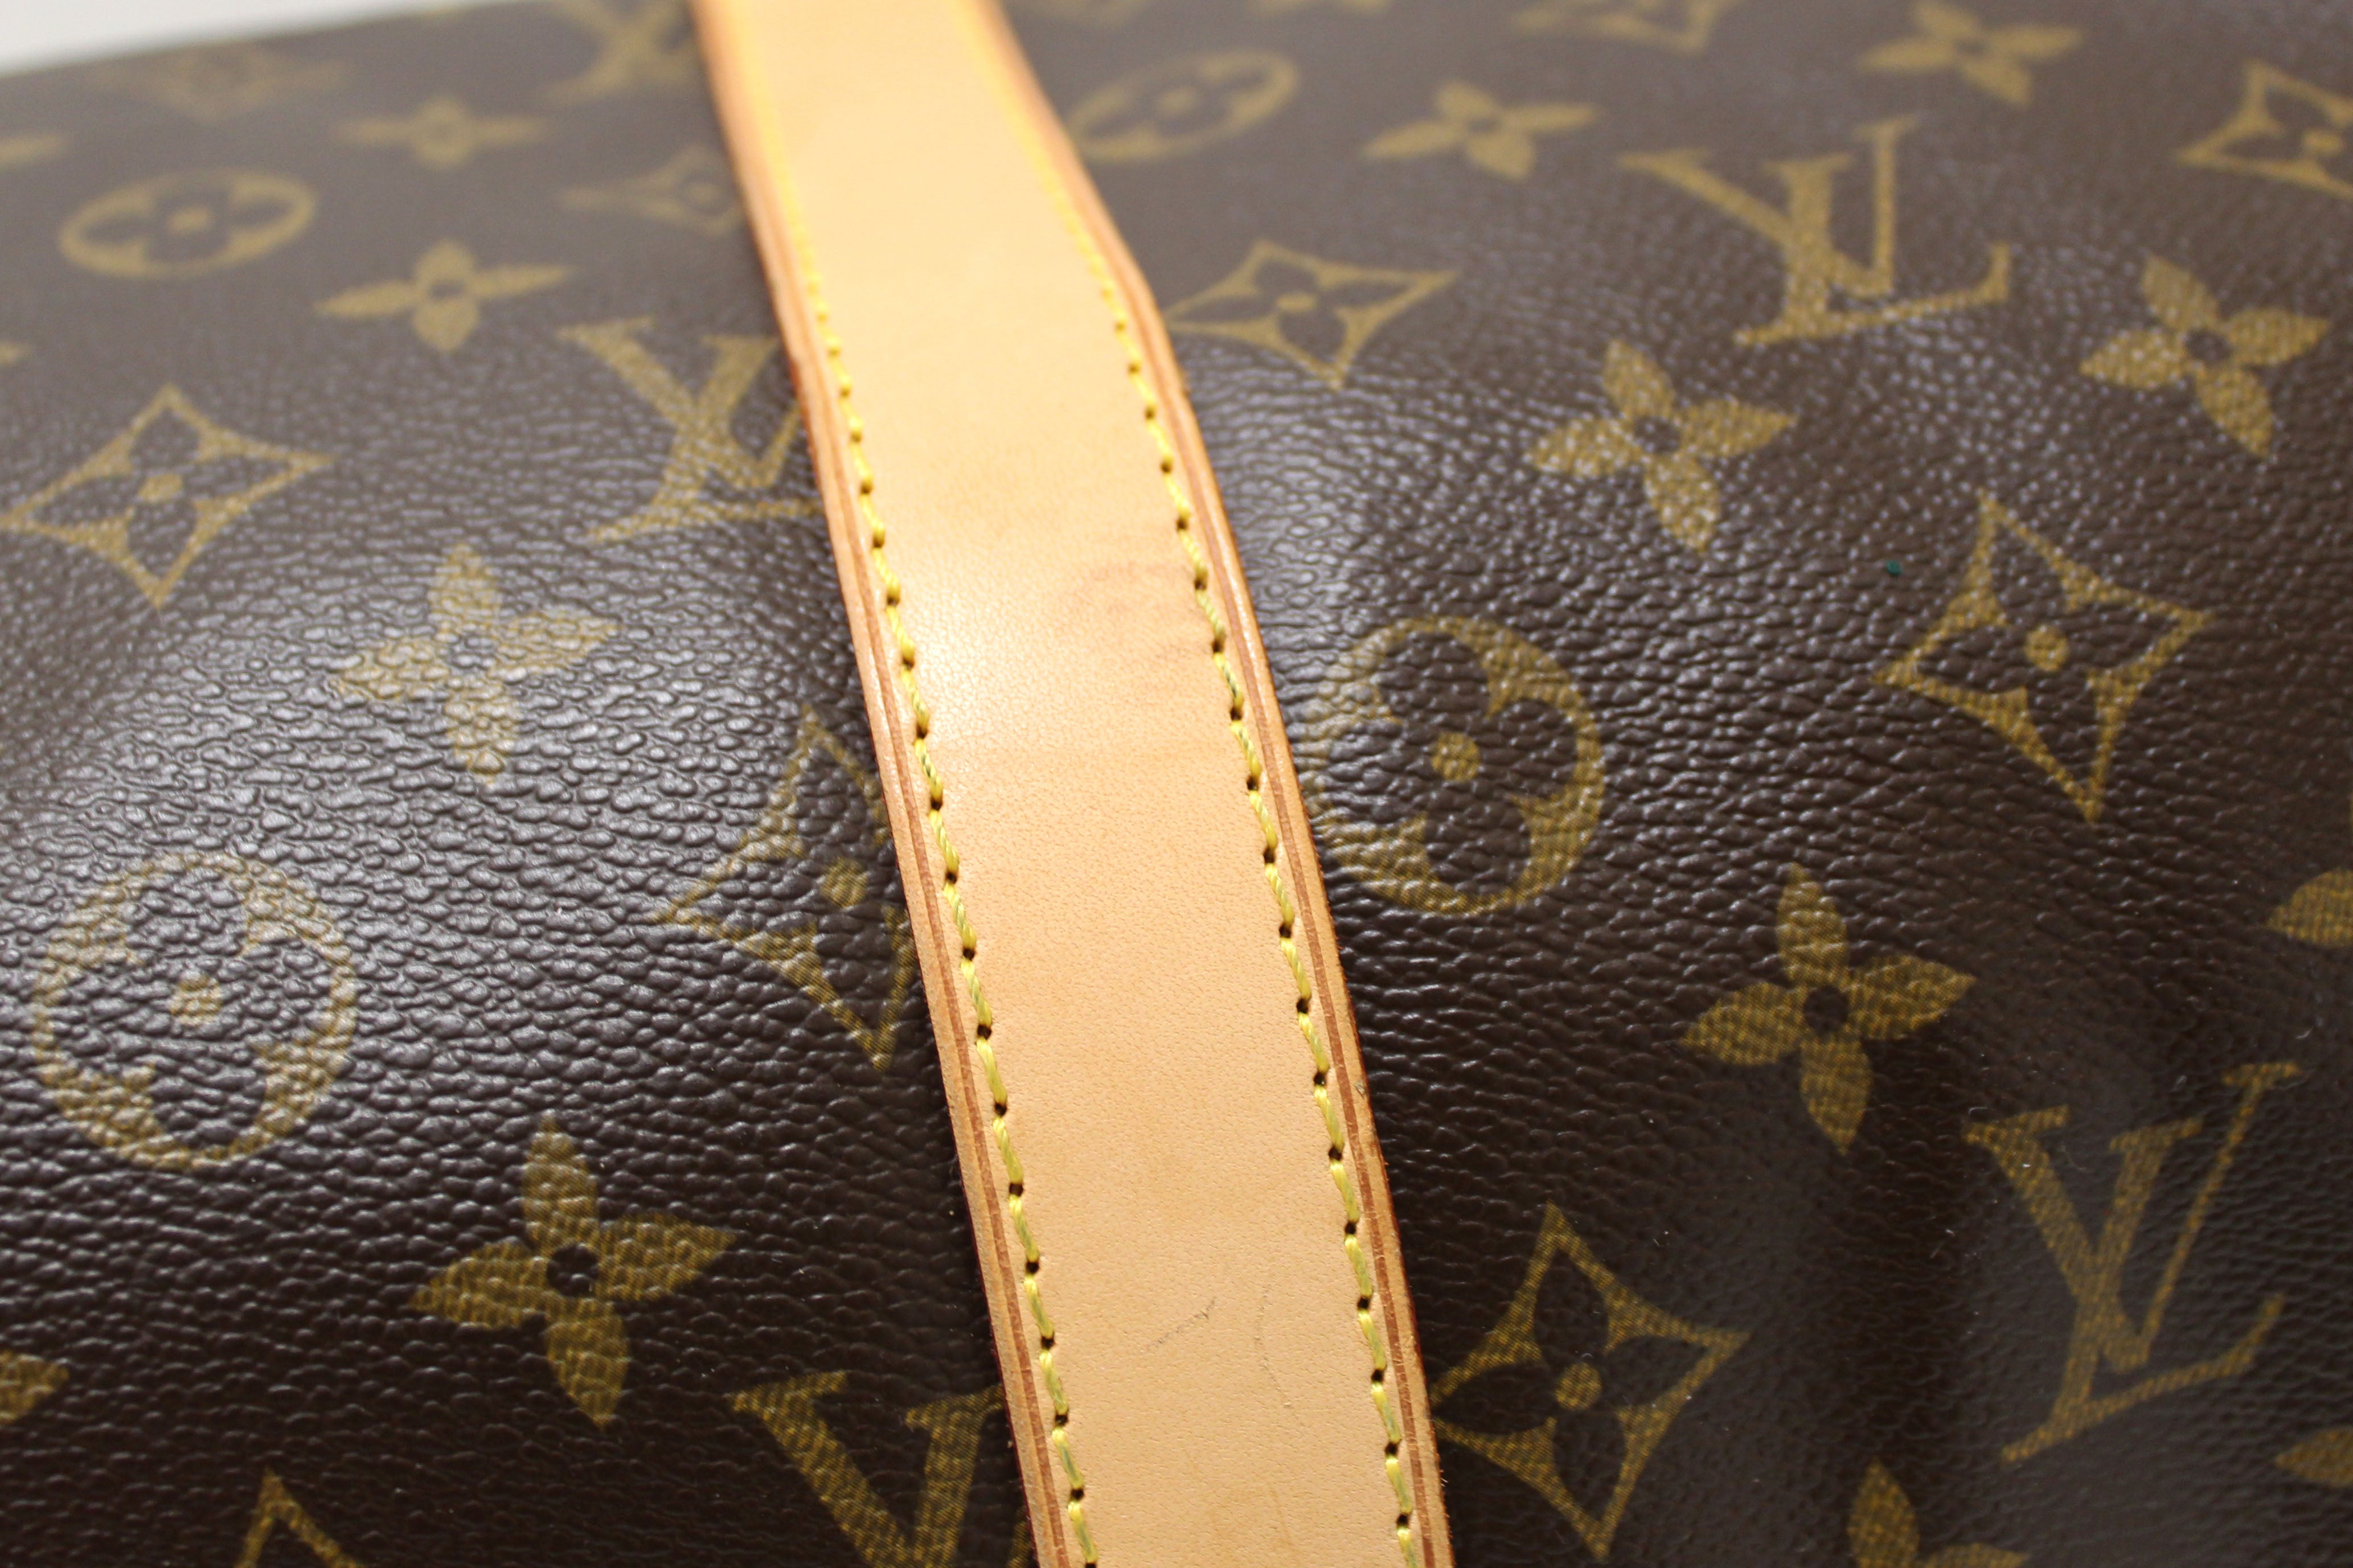 Authentic Louis Vuitton Classic Monogram Keepall 45 Travel Bag